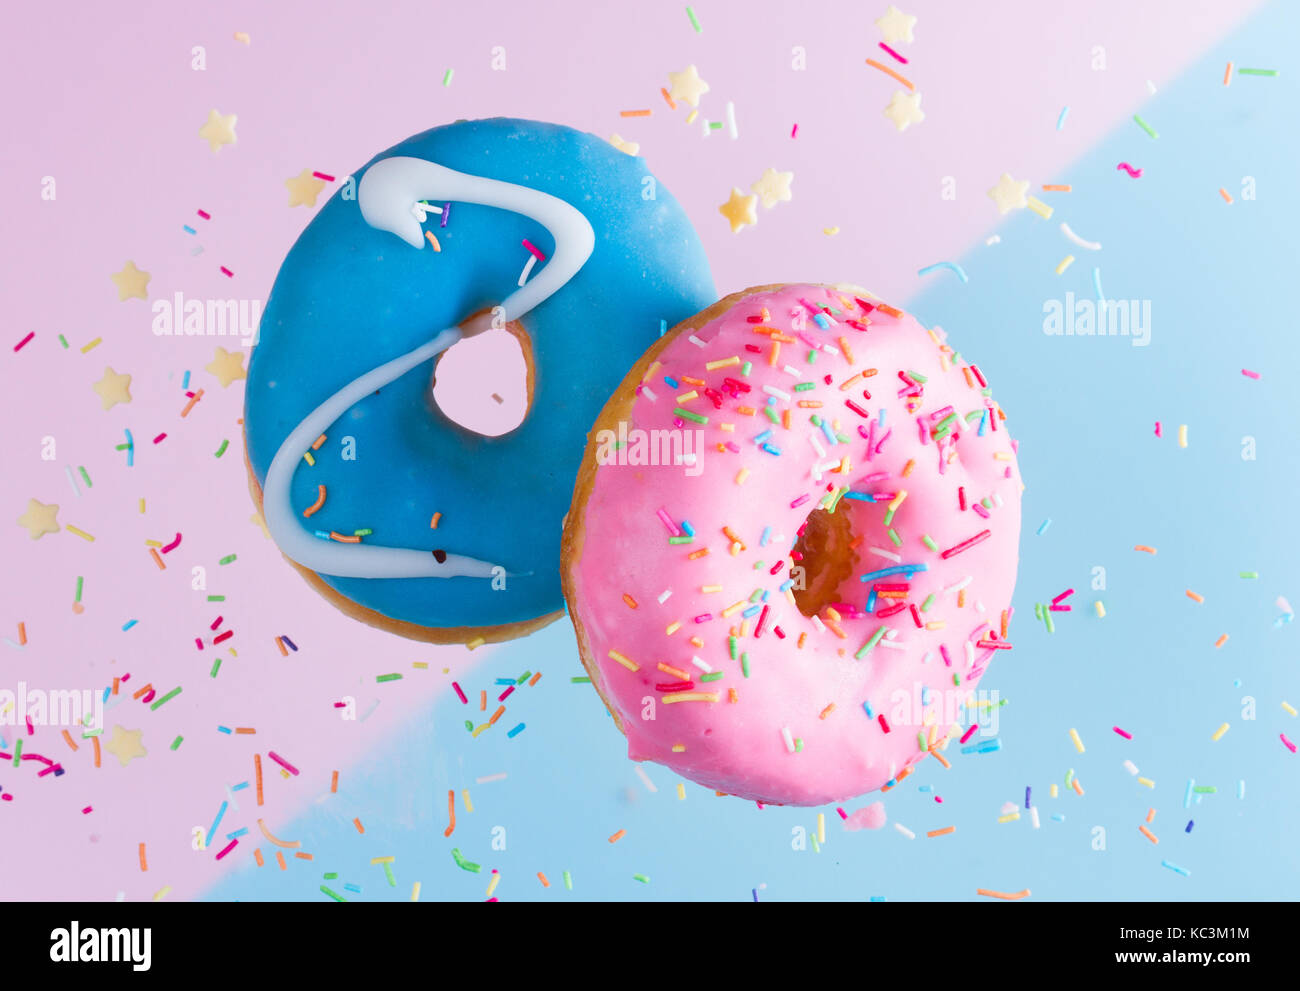 Flying donuts en azul Foto de stock